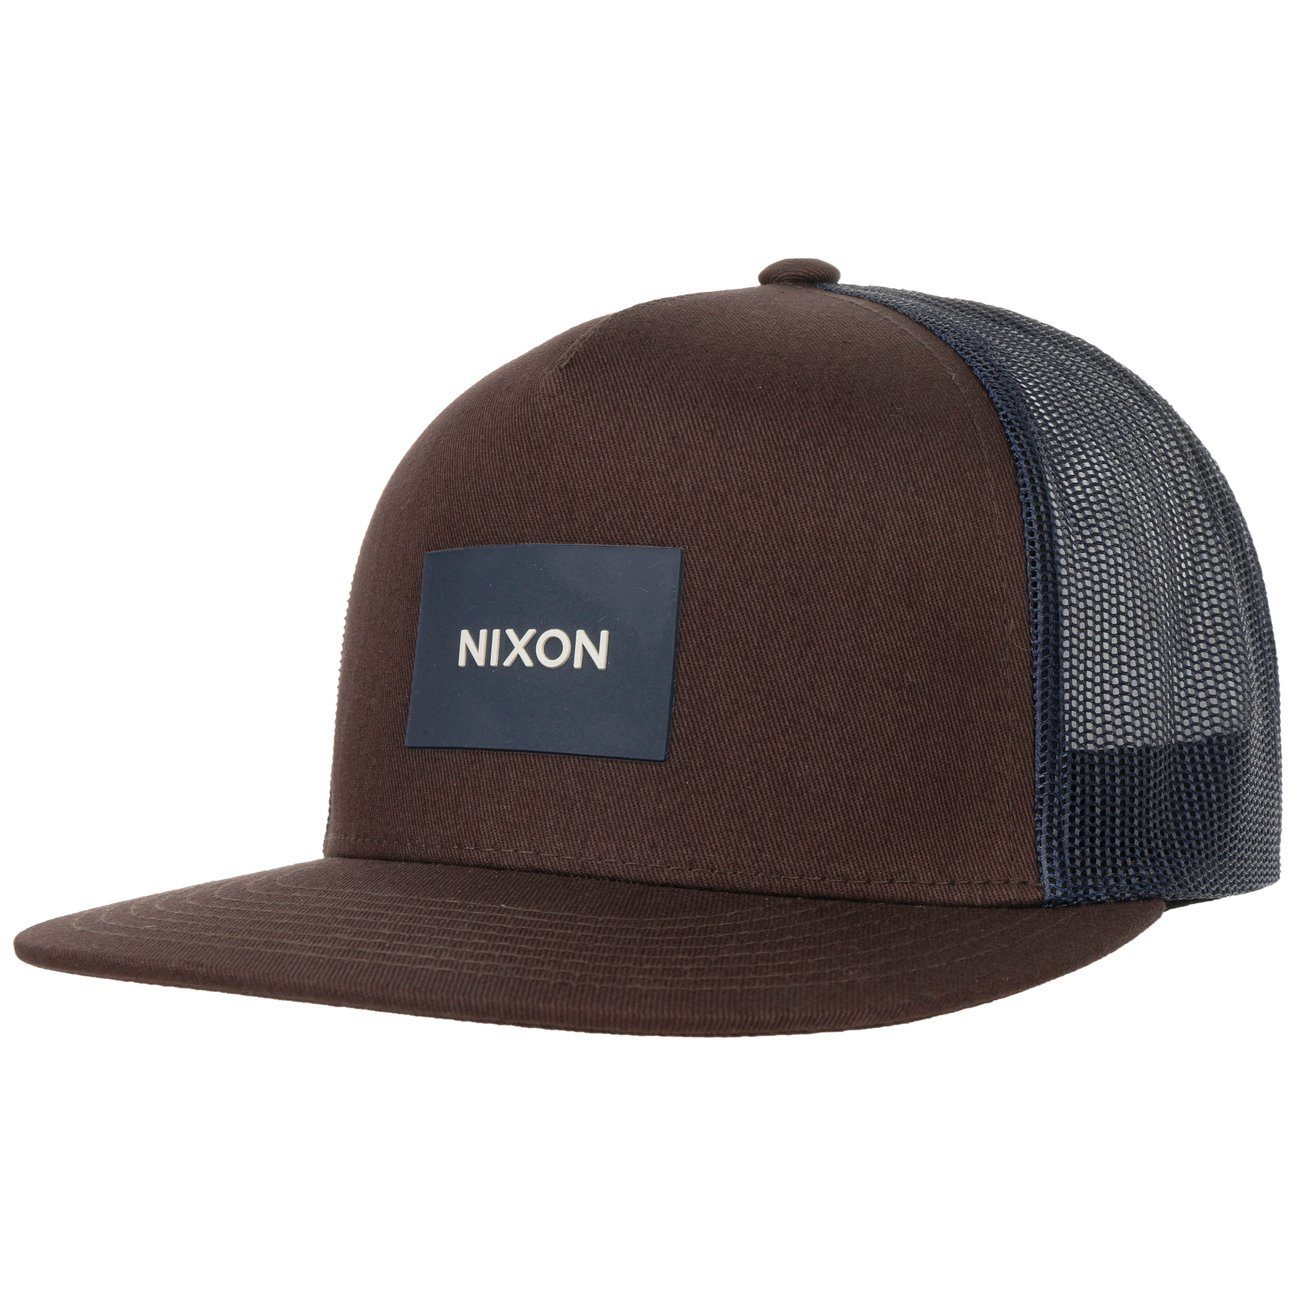 Nixon Snapback (1-St) braun-blau Trucker Cap Basecap